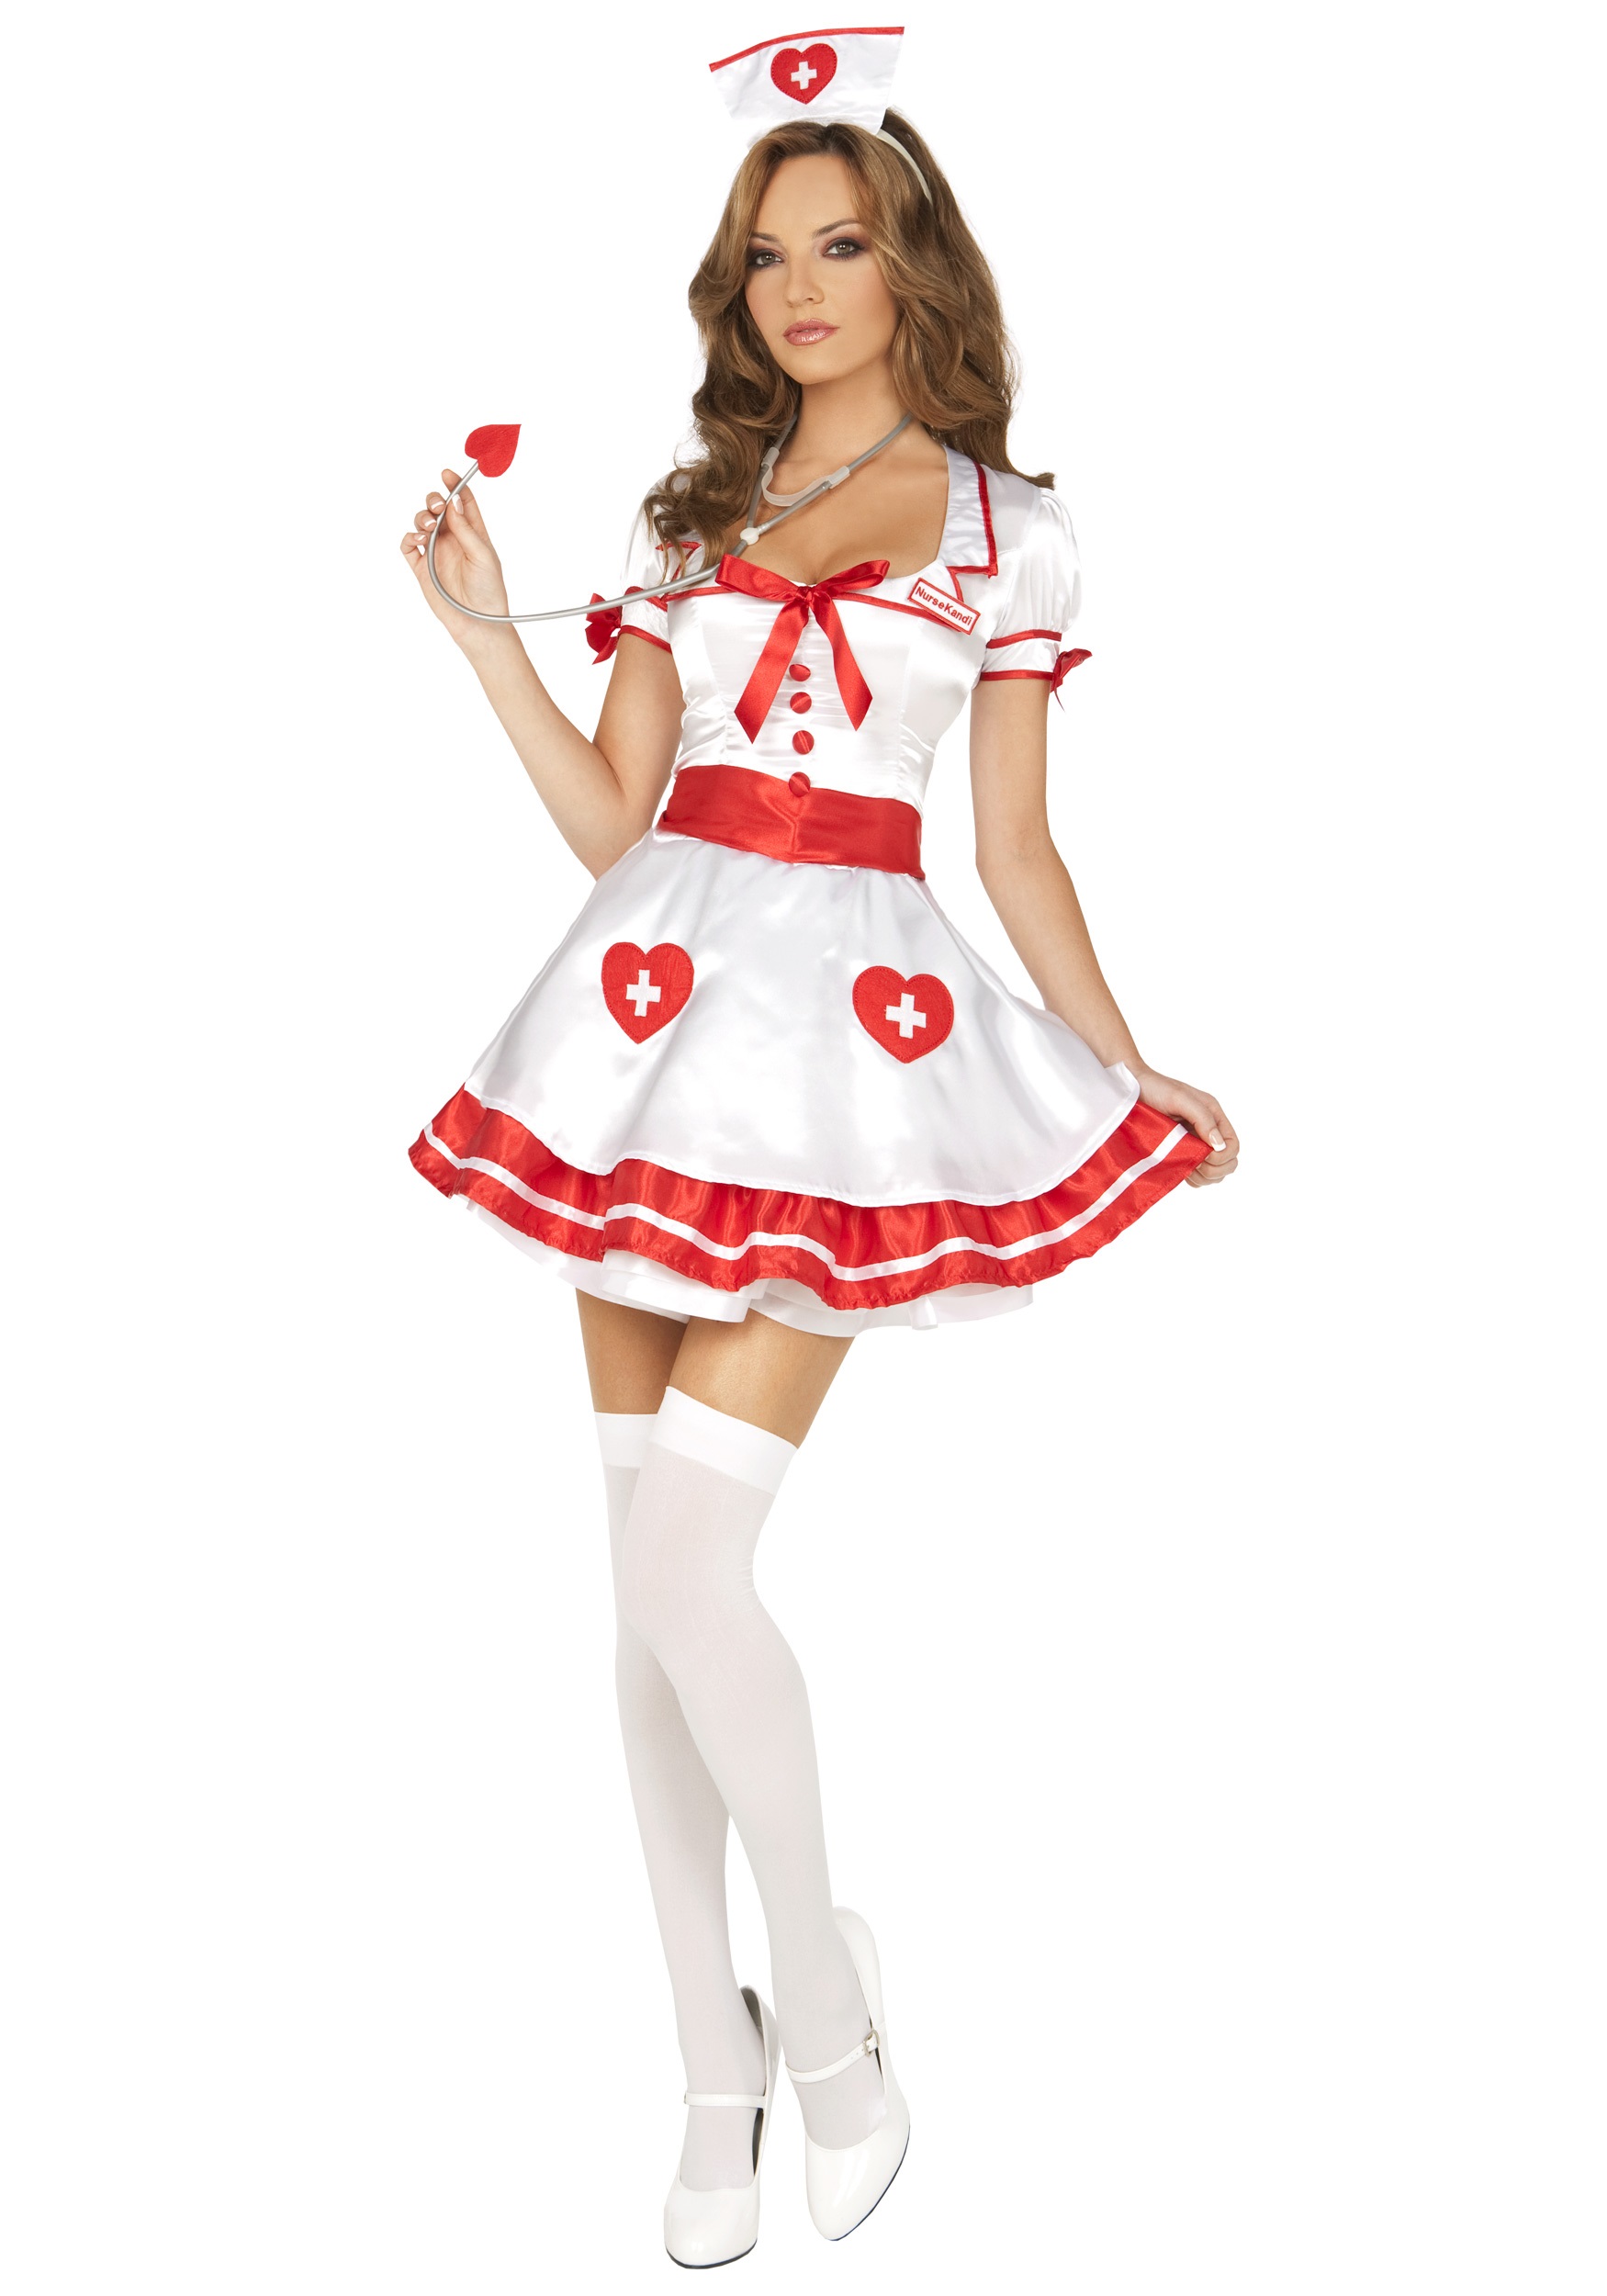 Nurse Costume Telegraph 